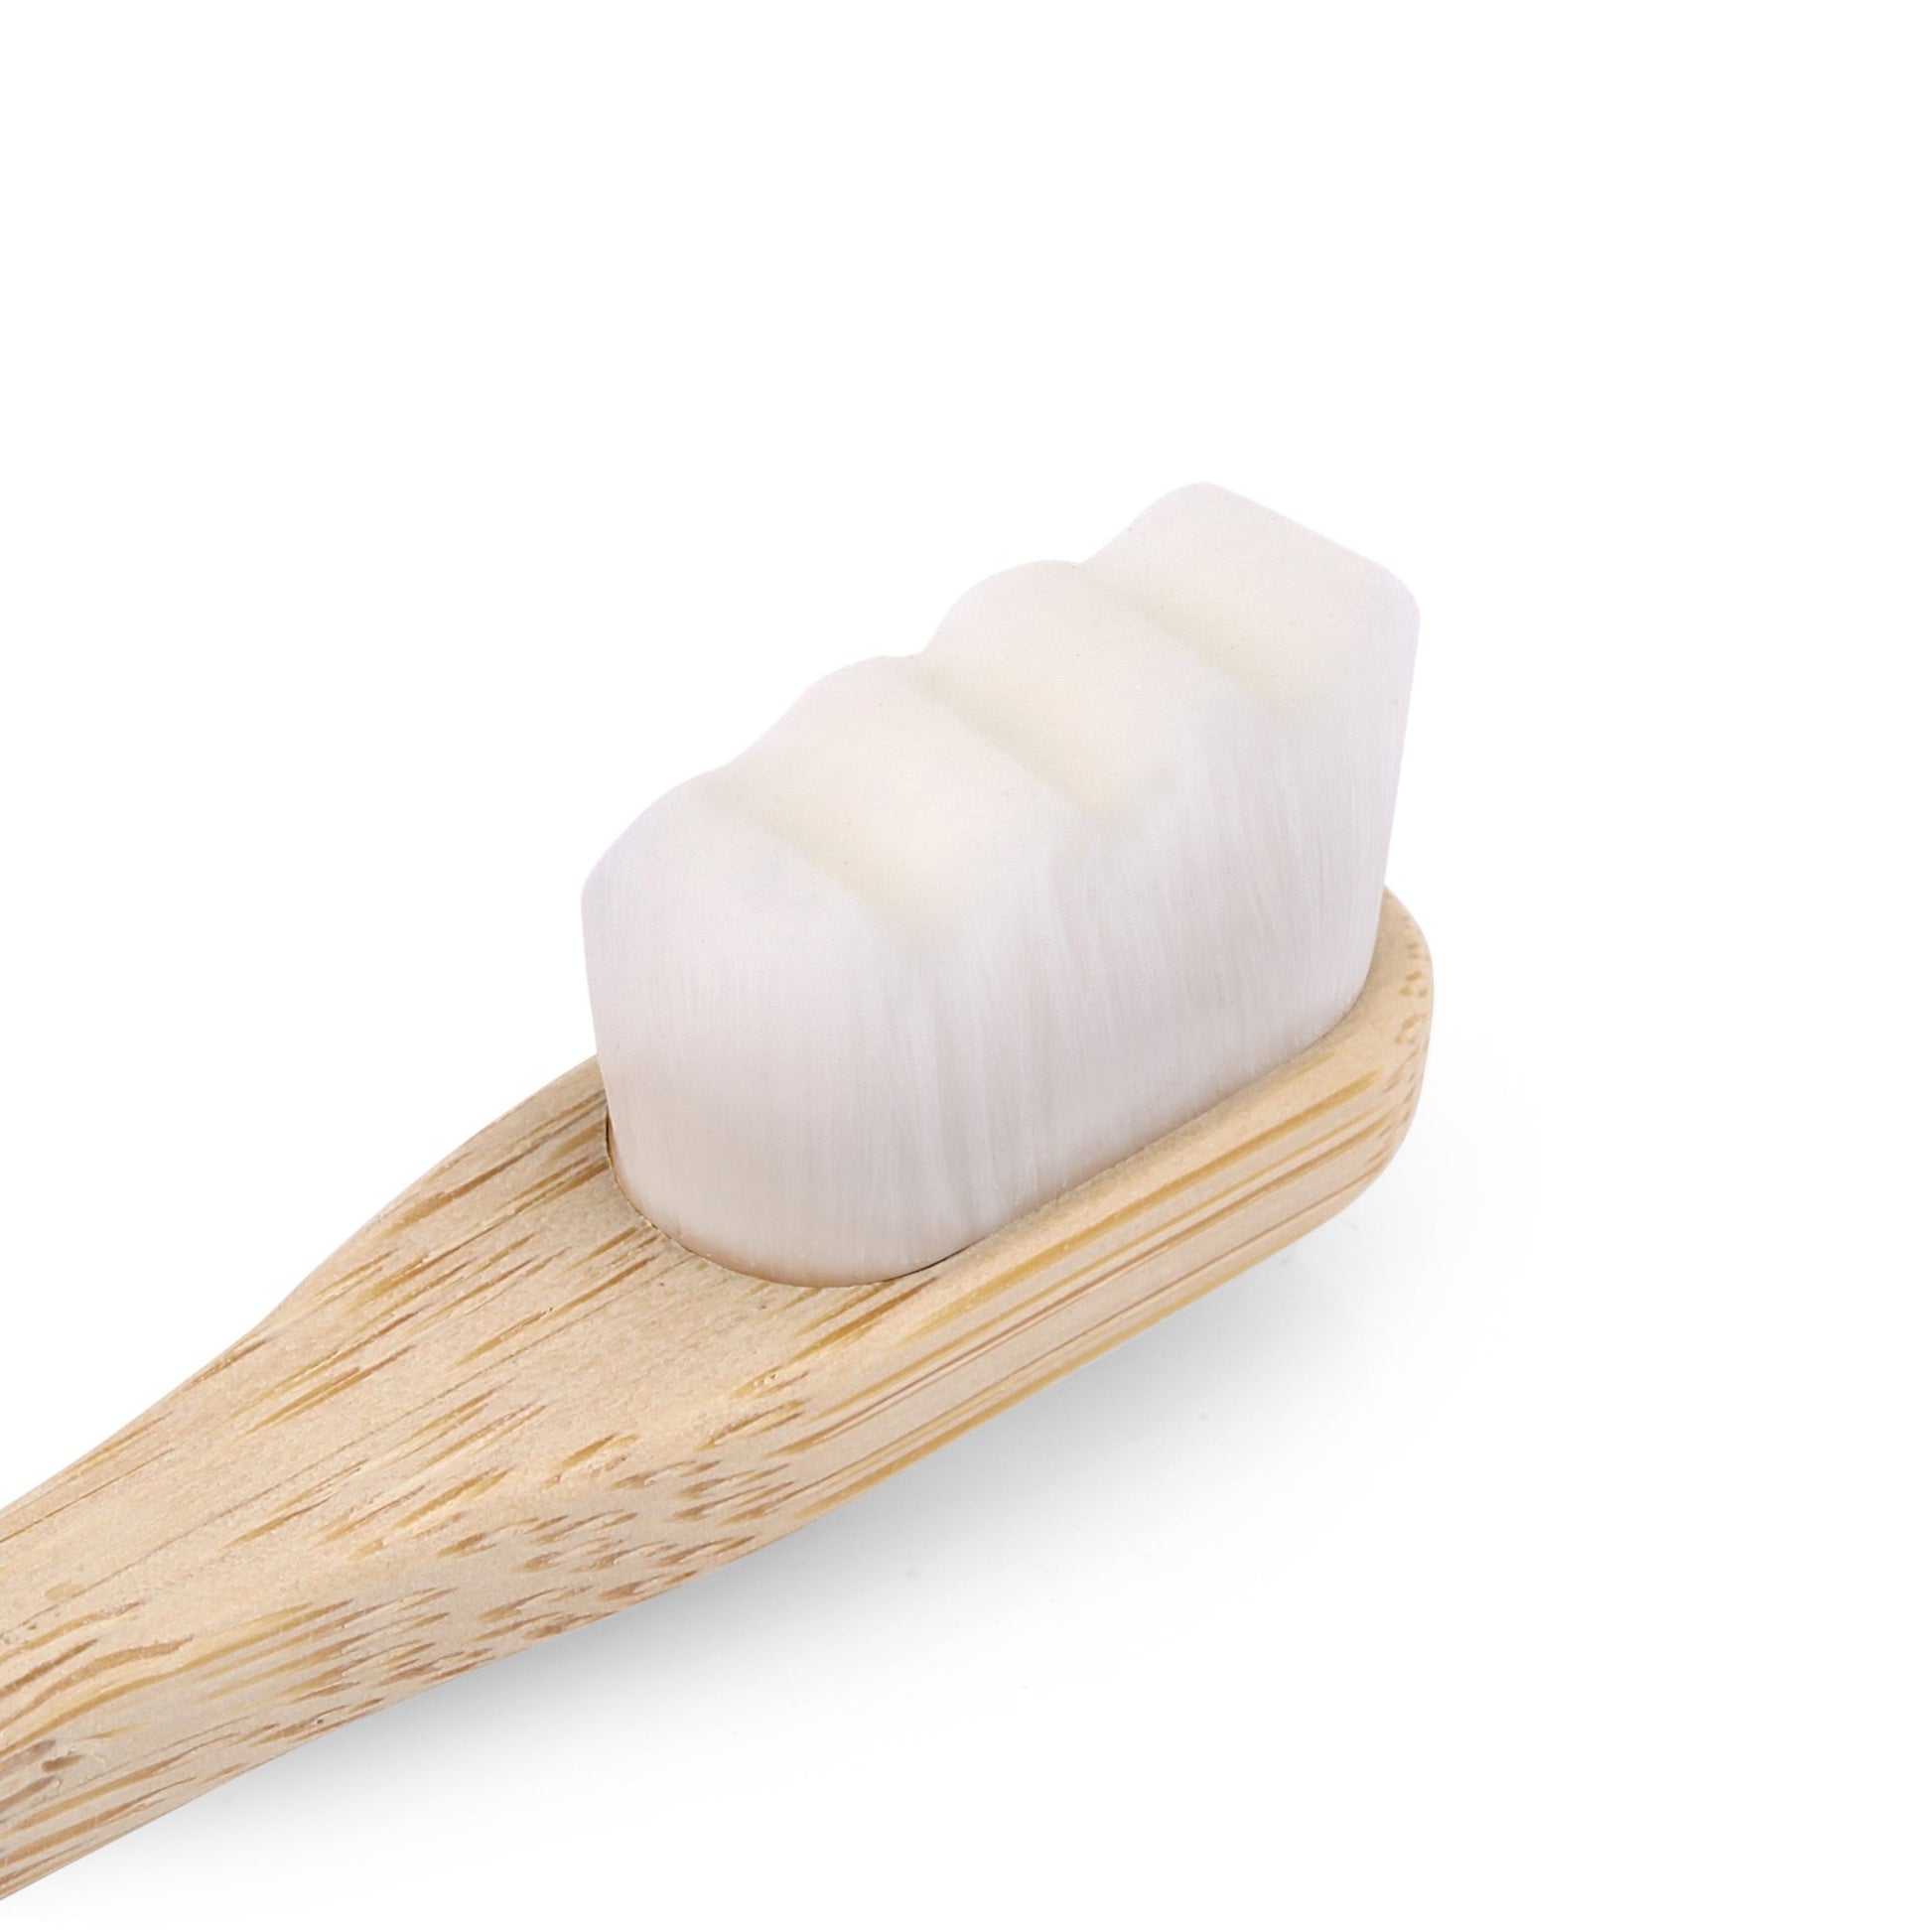 T-Brush Nano Bamboo Toothbrush - White Color - Attily - #boycott #فلسطين #palestine